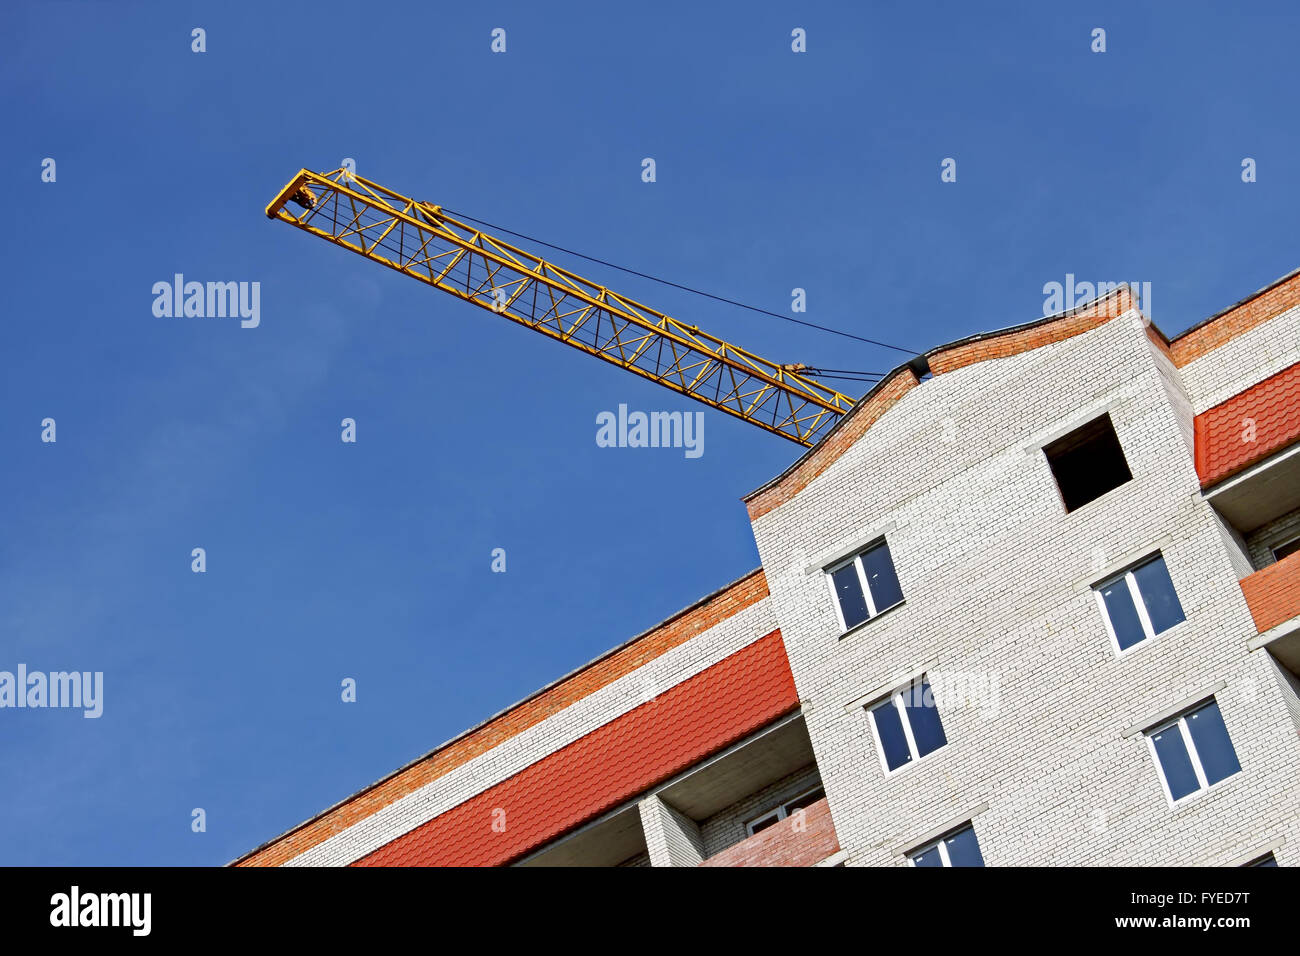 Kranausleger über Gebäude Stockfoto